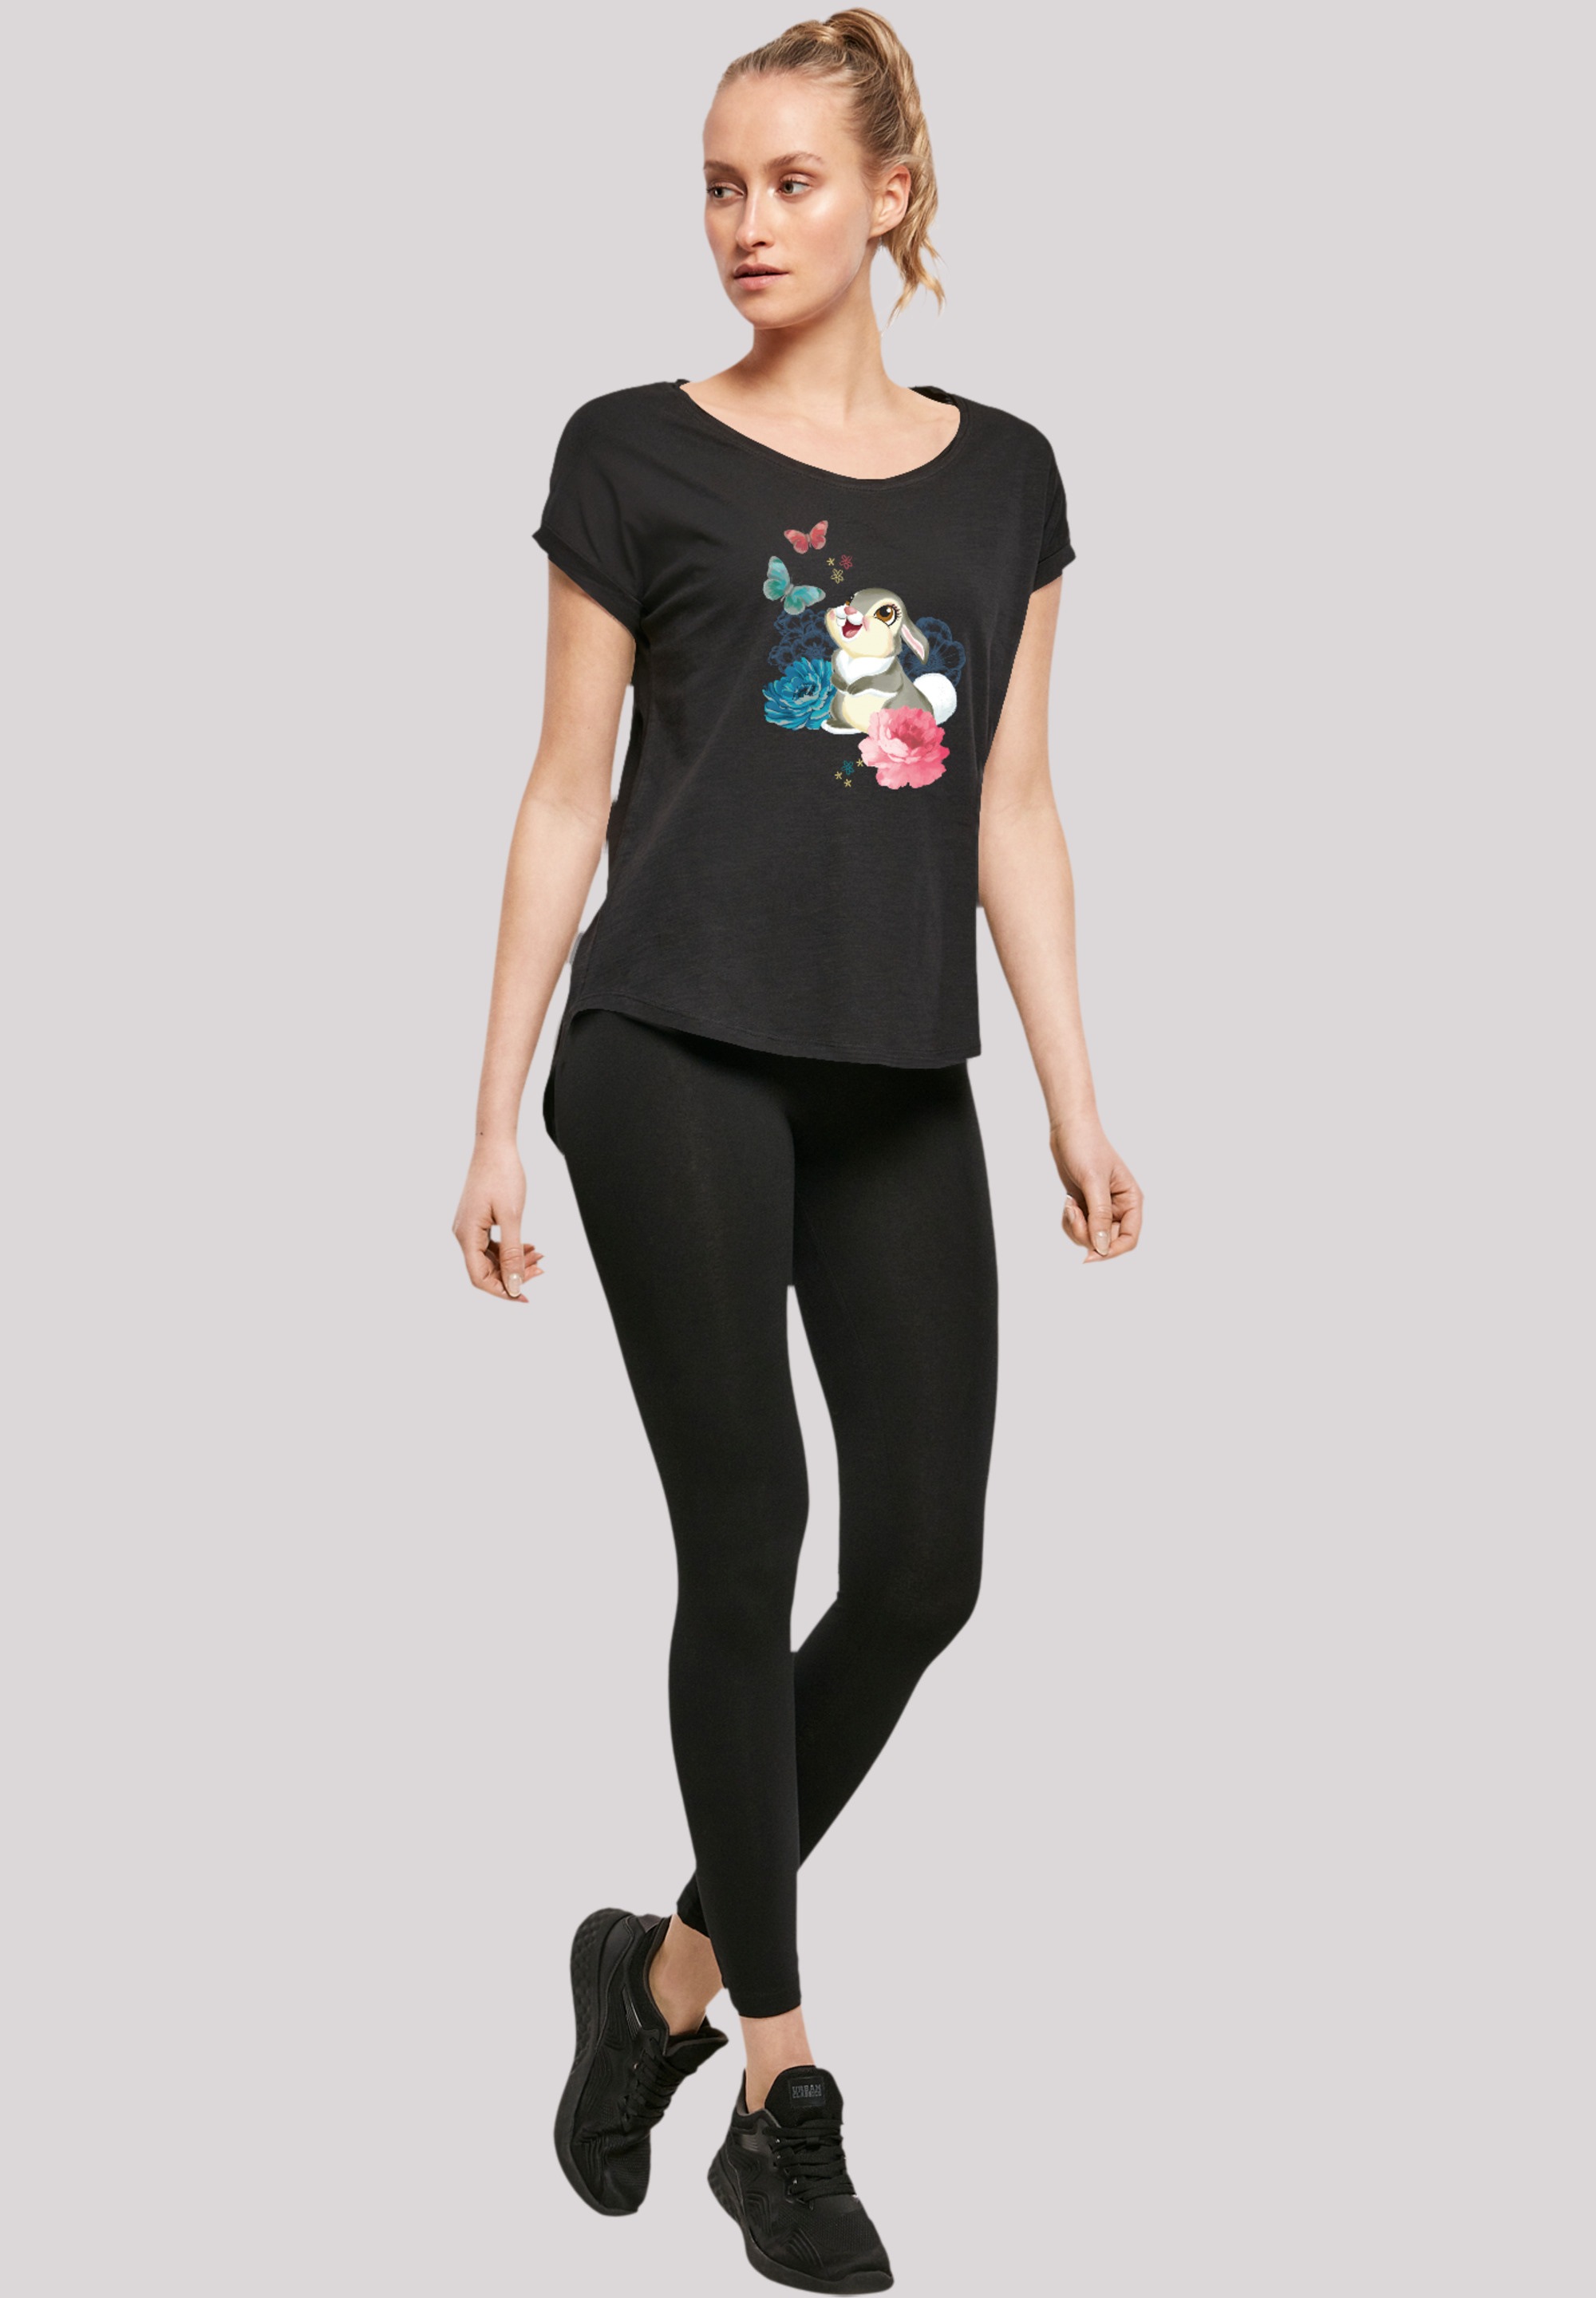 kaufen T-Shirt online »Disney F4NT4STIC I\'m Qualität Premium Bambi walking Thumper«, |